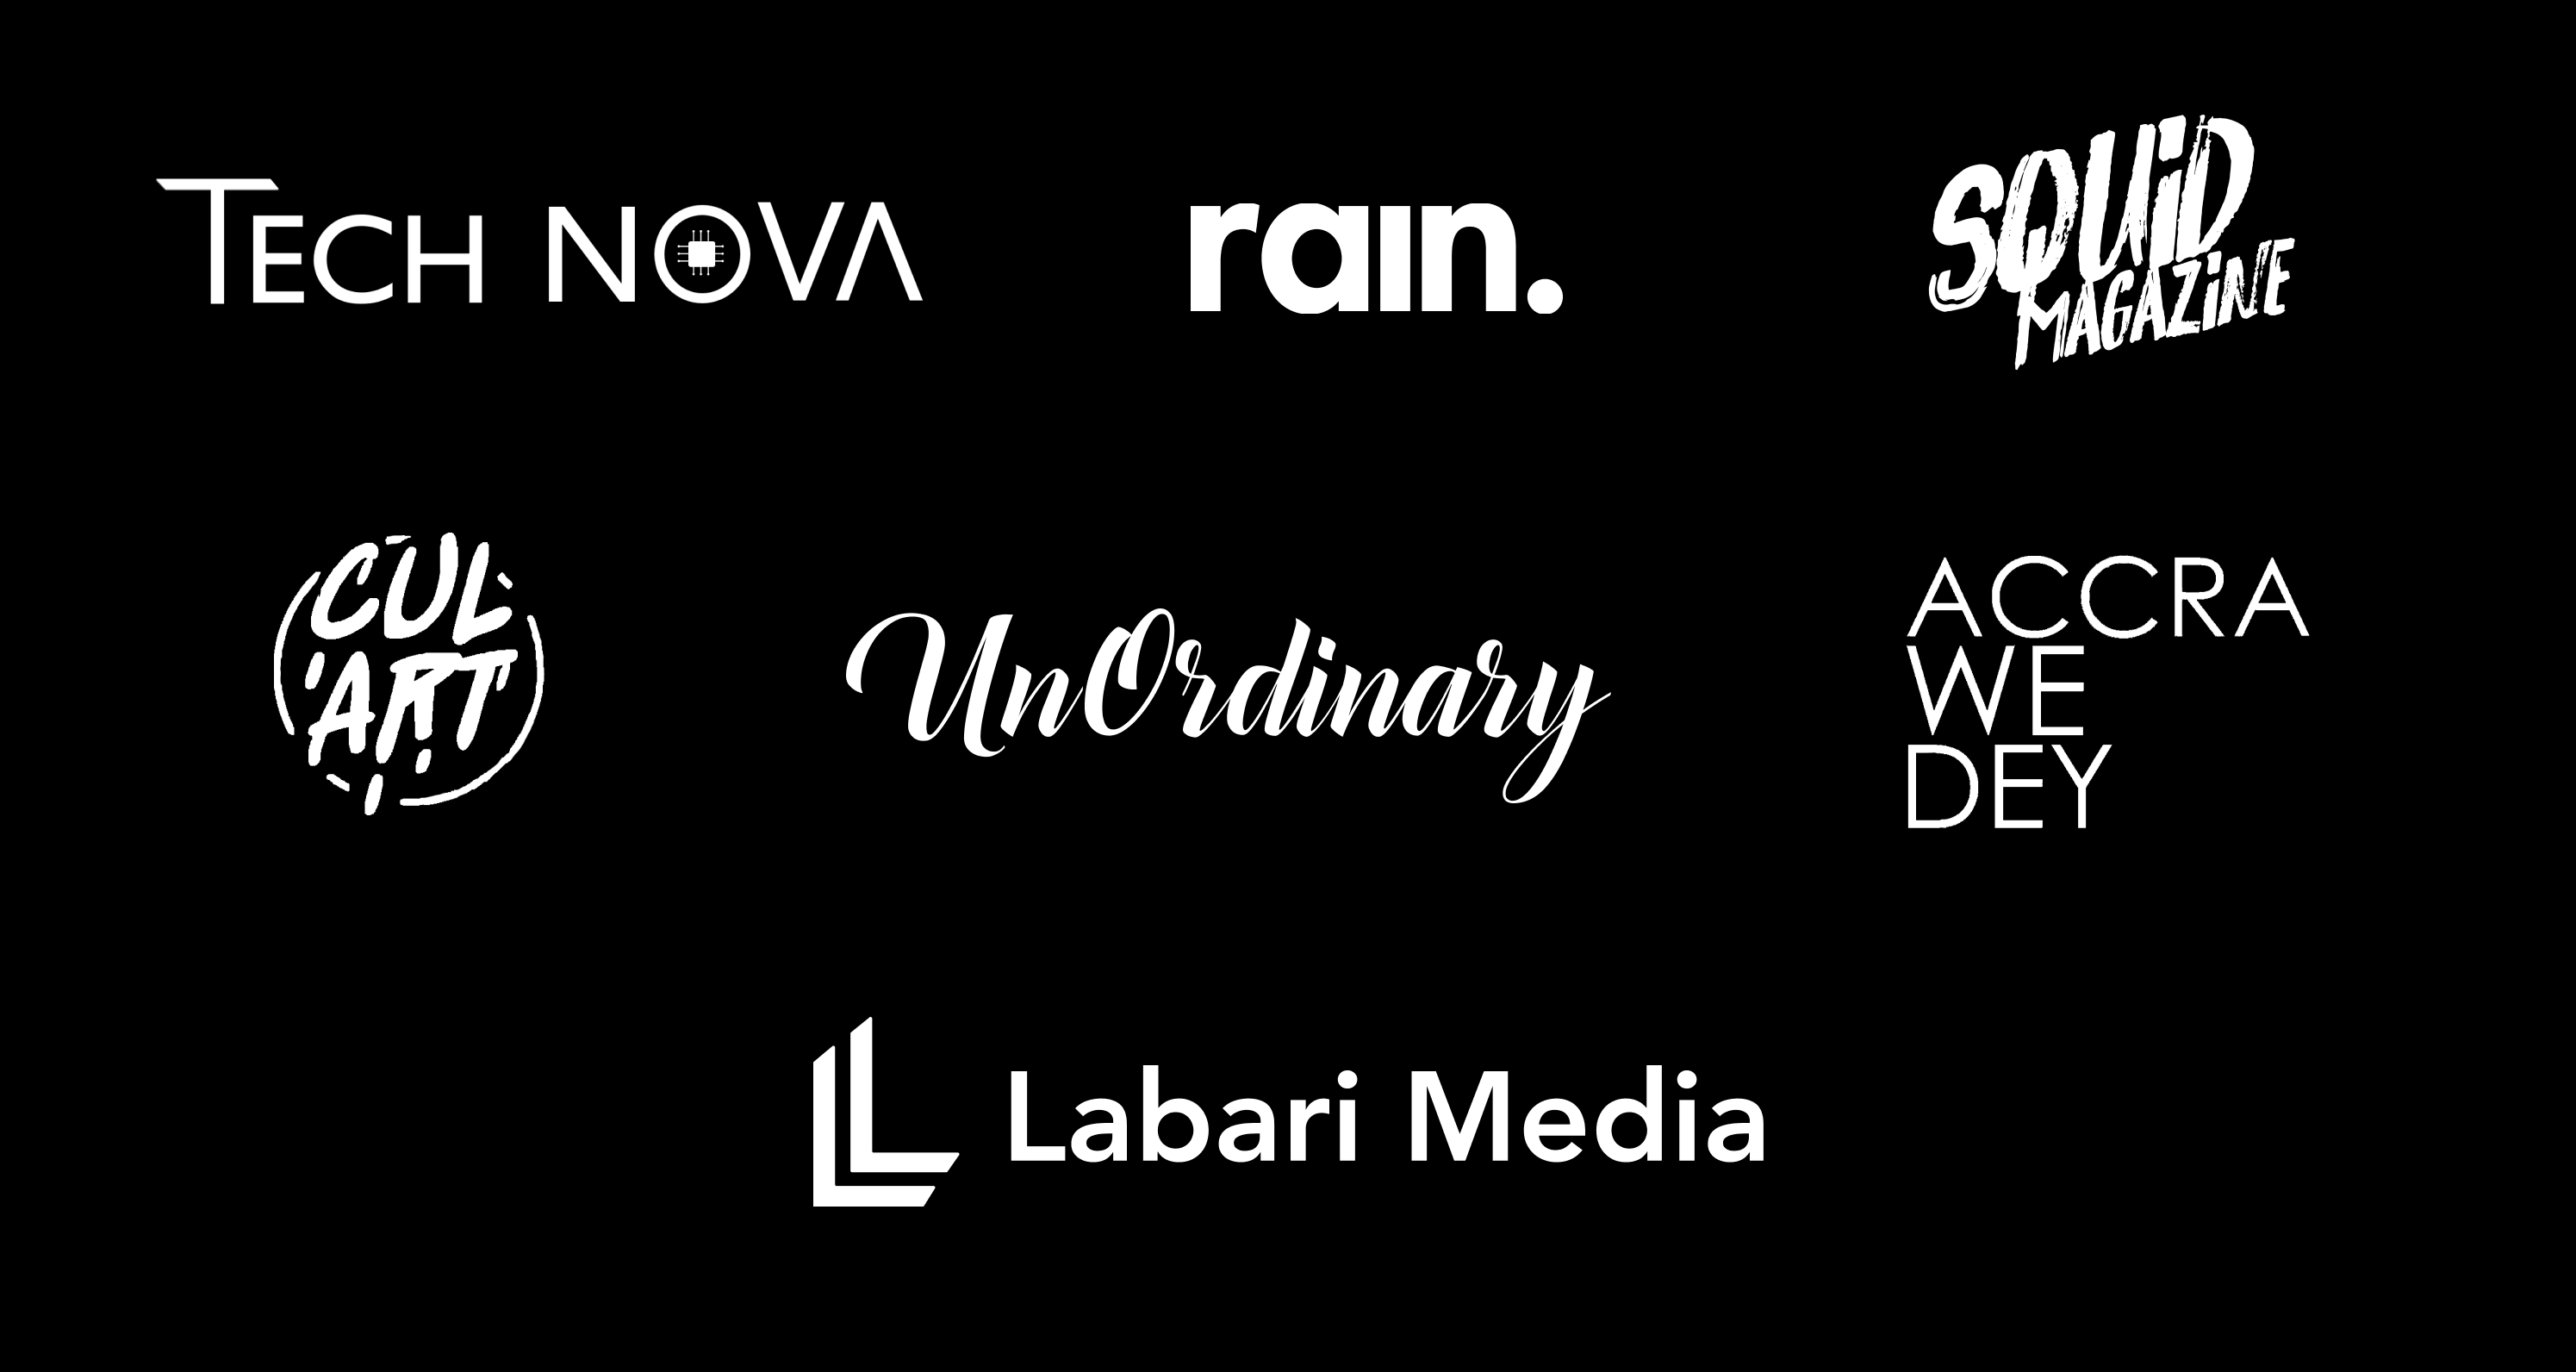 A banner showing all the different organizations under Labari Media Group, namely Tech Nova, Harmattan Rain, Squid Magazine, Accra We Dey, Unordinary and CulArt Blog